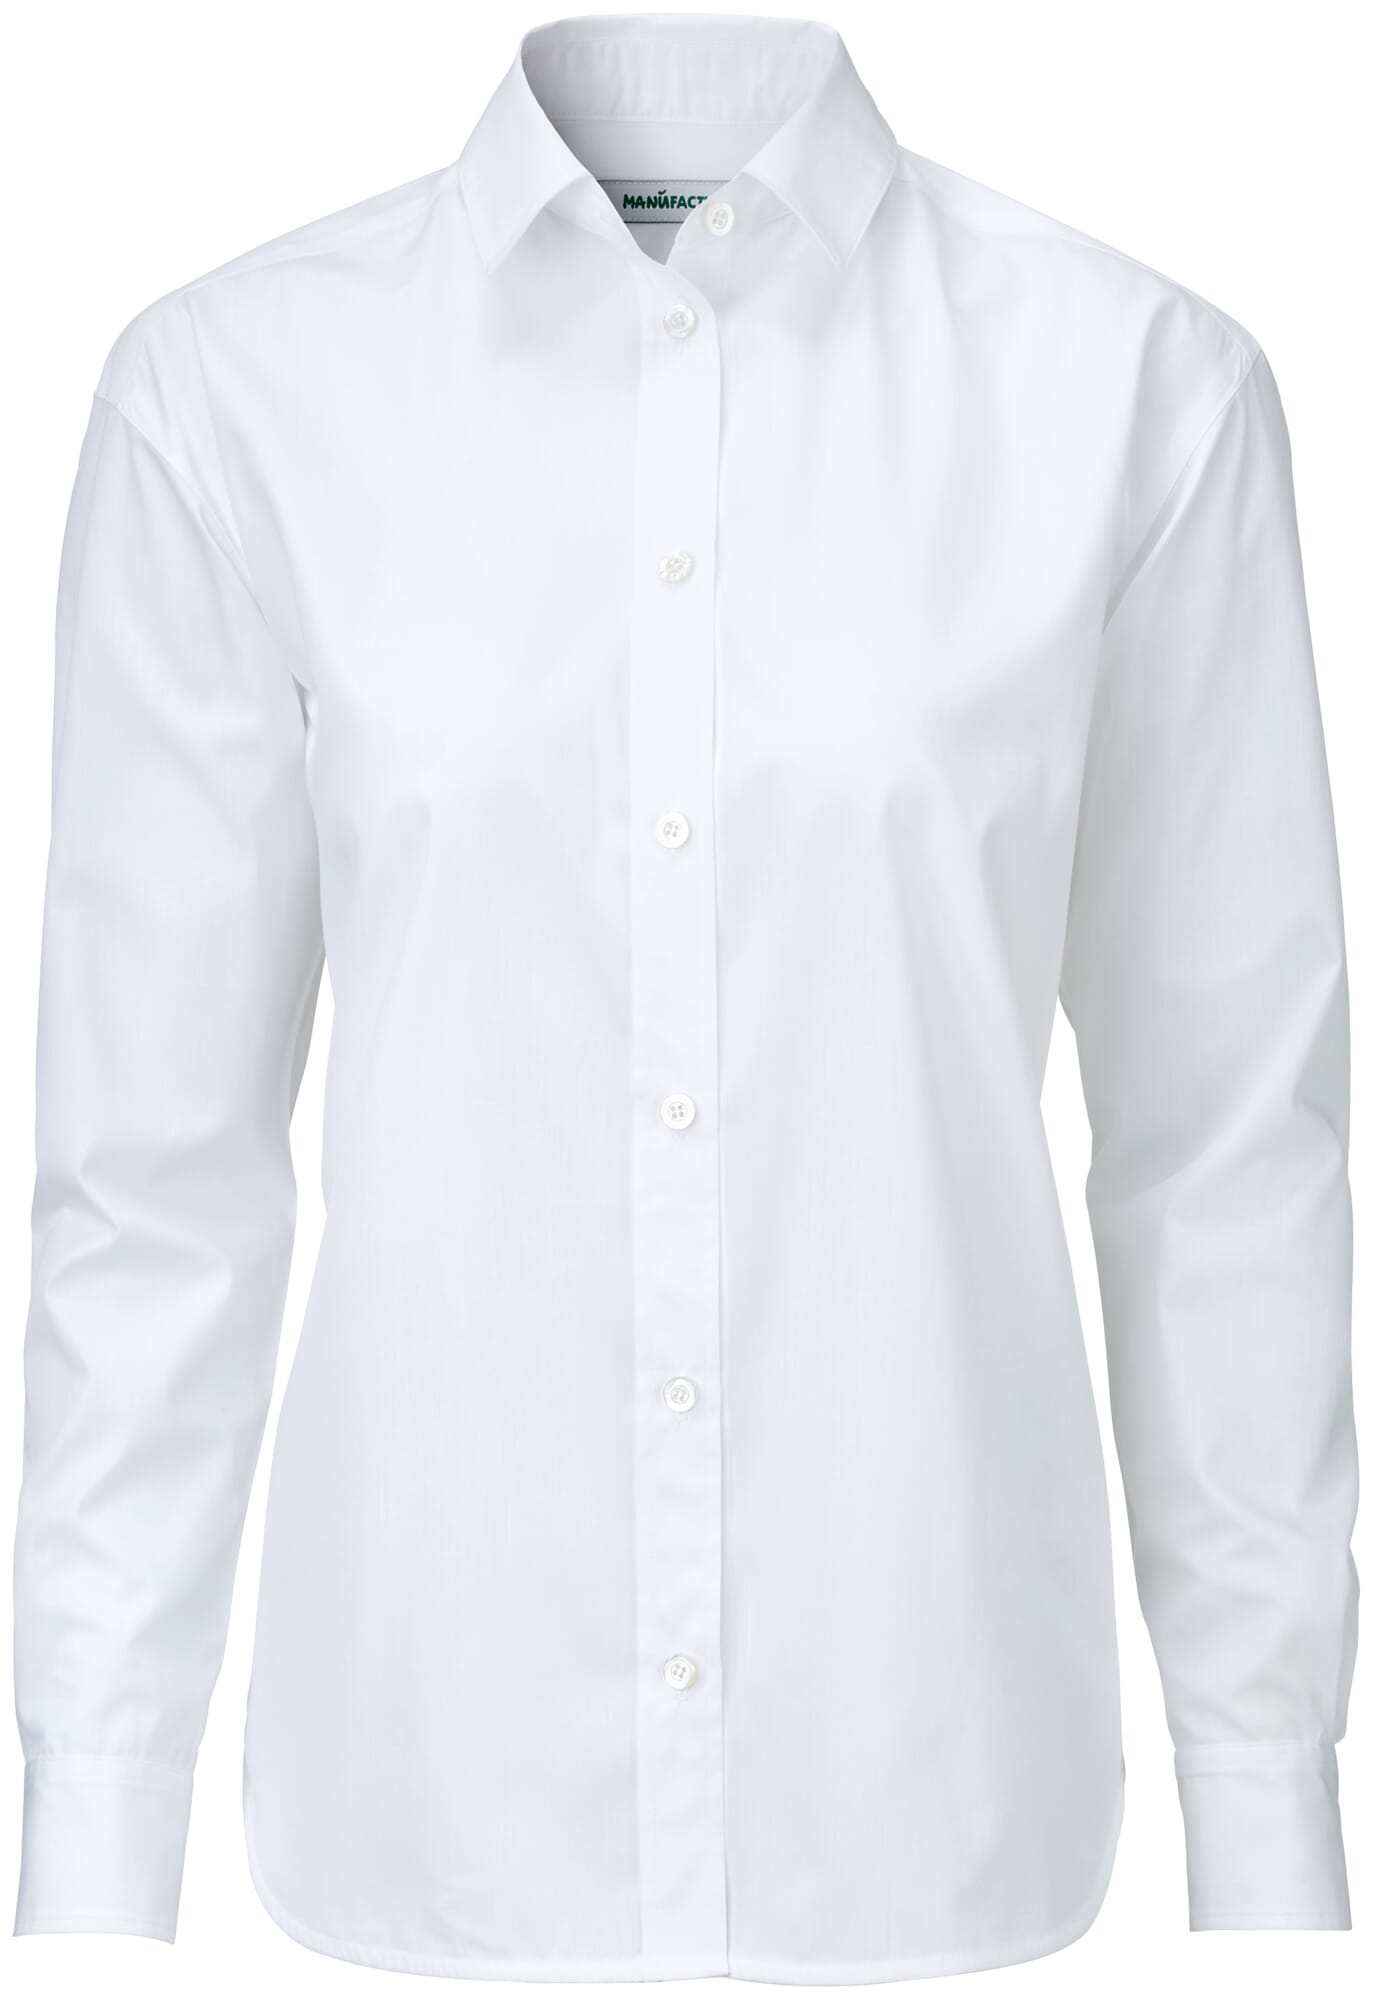 Zeg opzij Sturen Bliksem Dames blouse, Wit | Manufactum